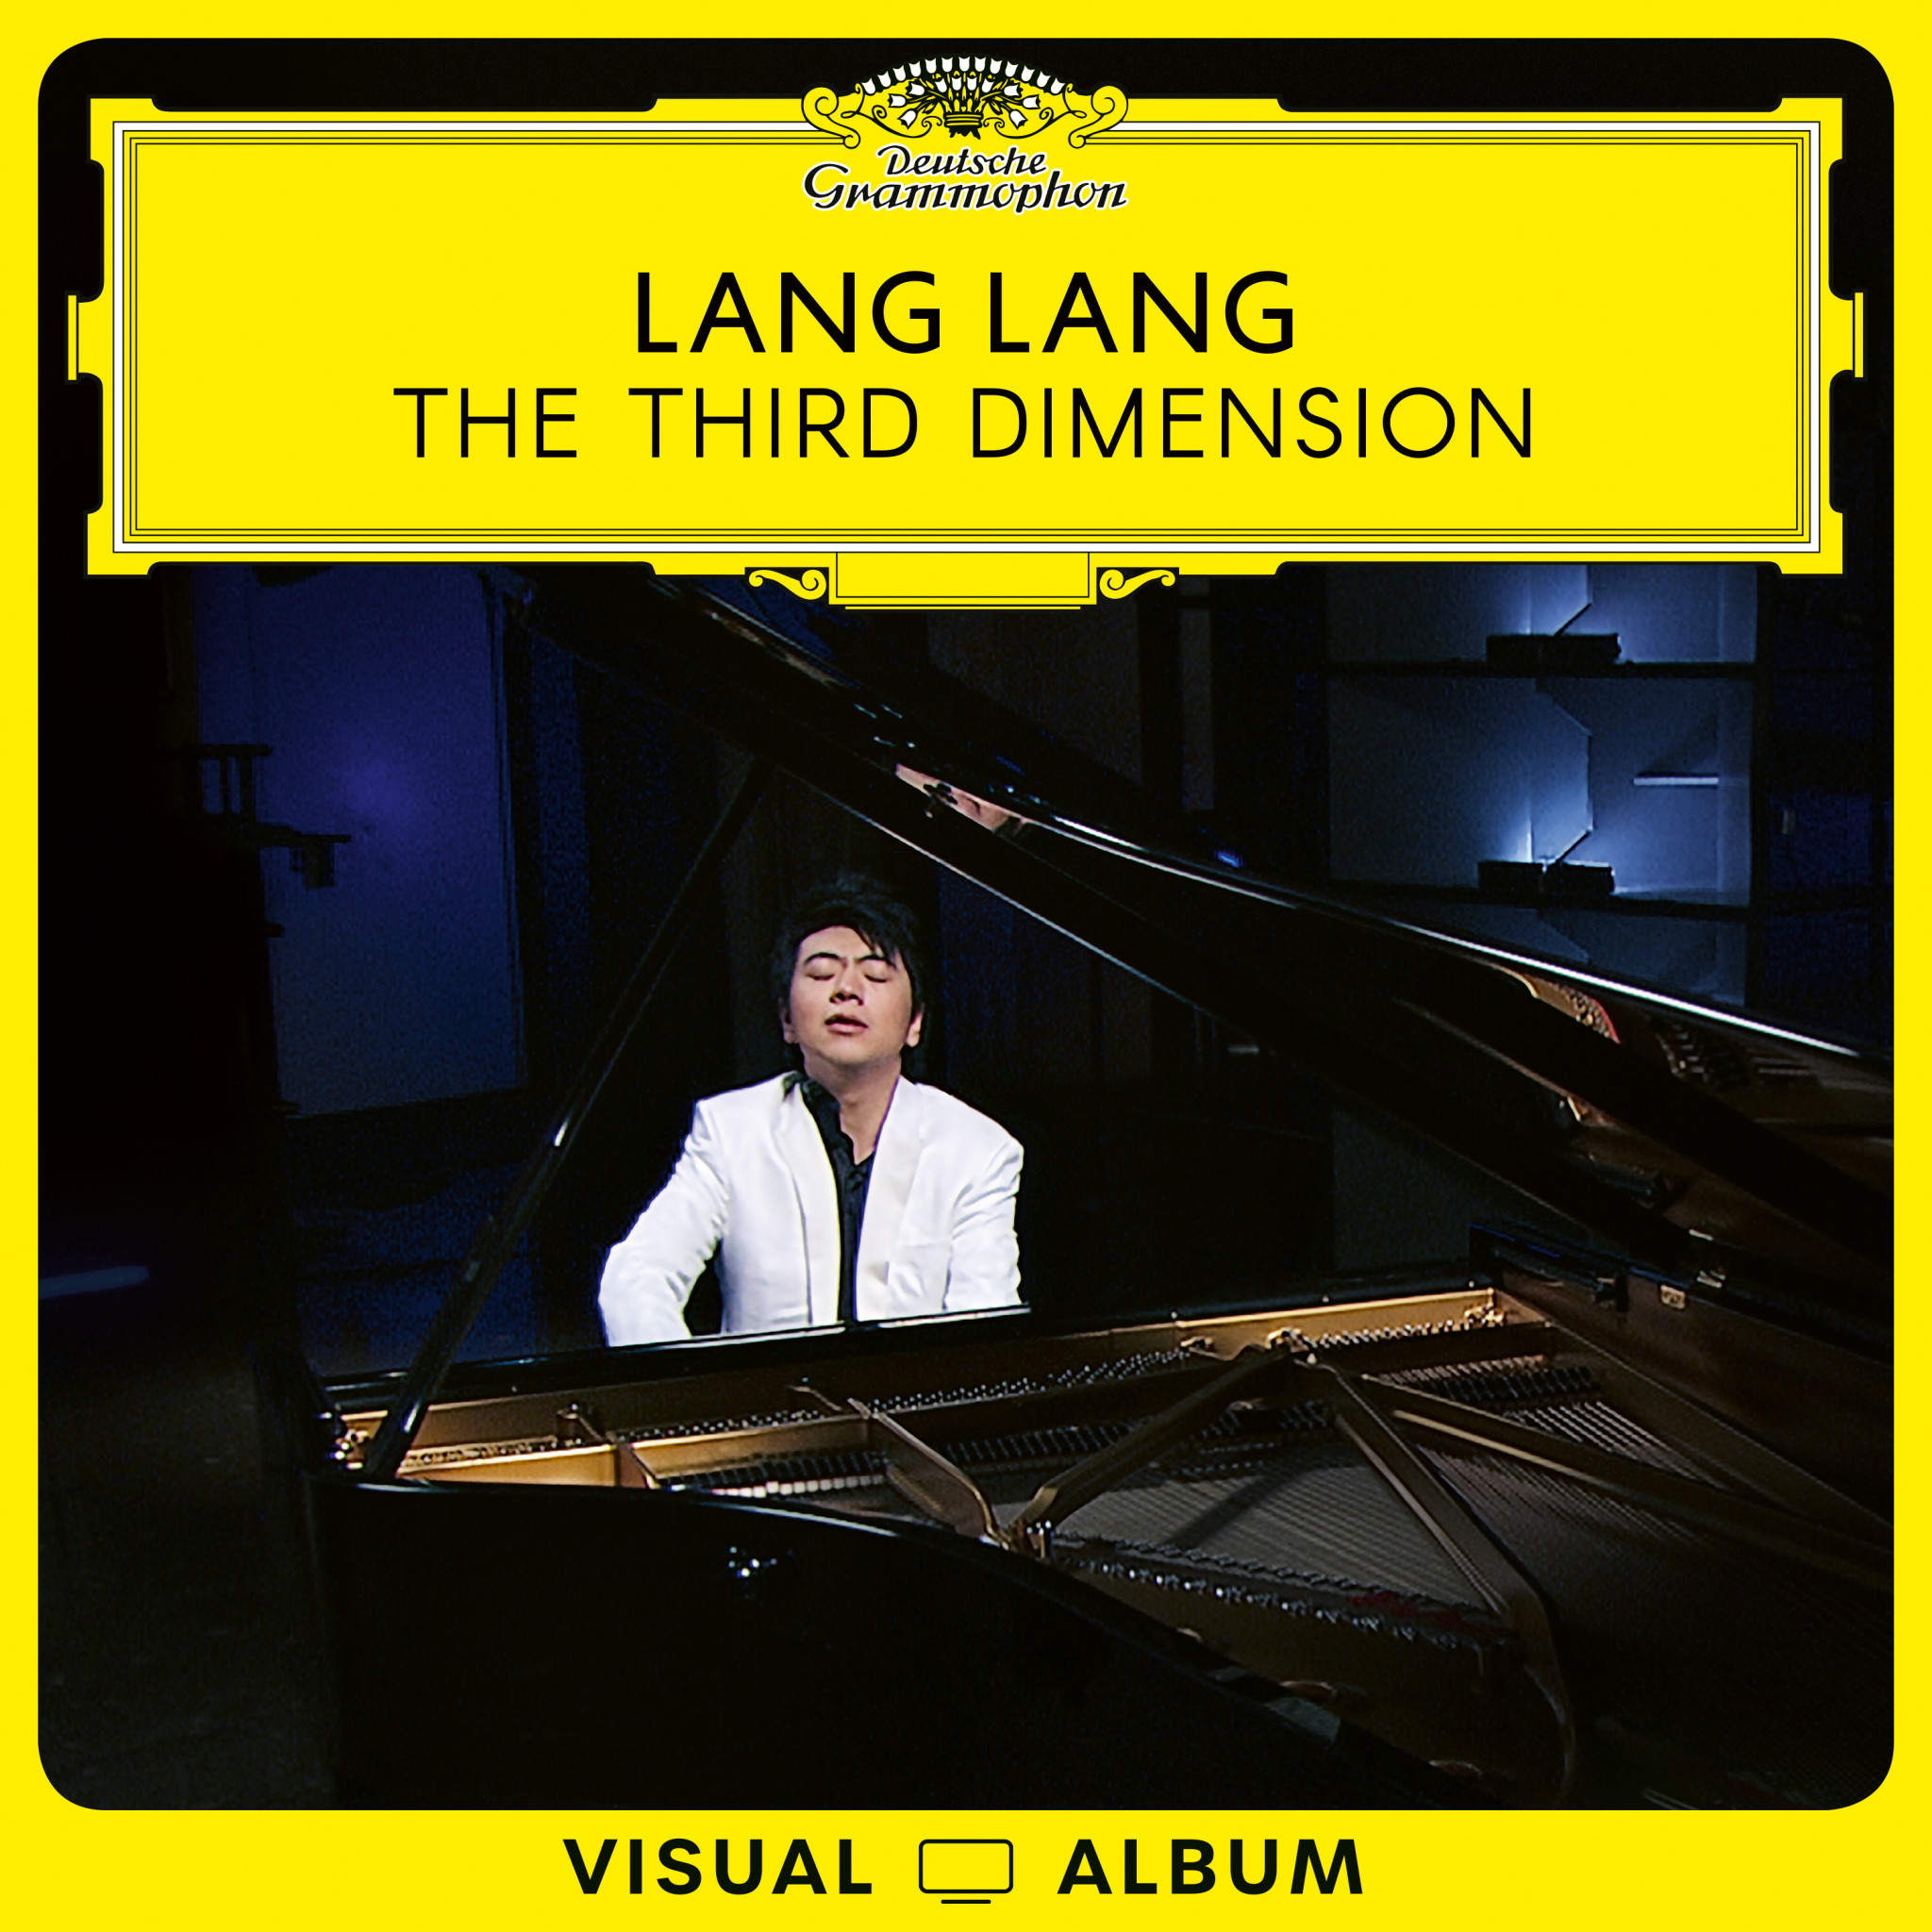 Lang Lang - The Third Dimension Visual Album Cover